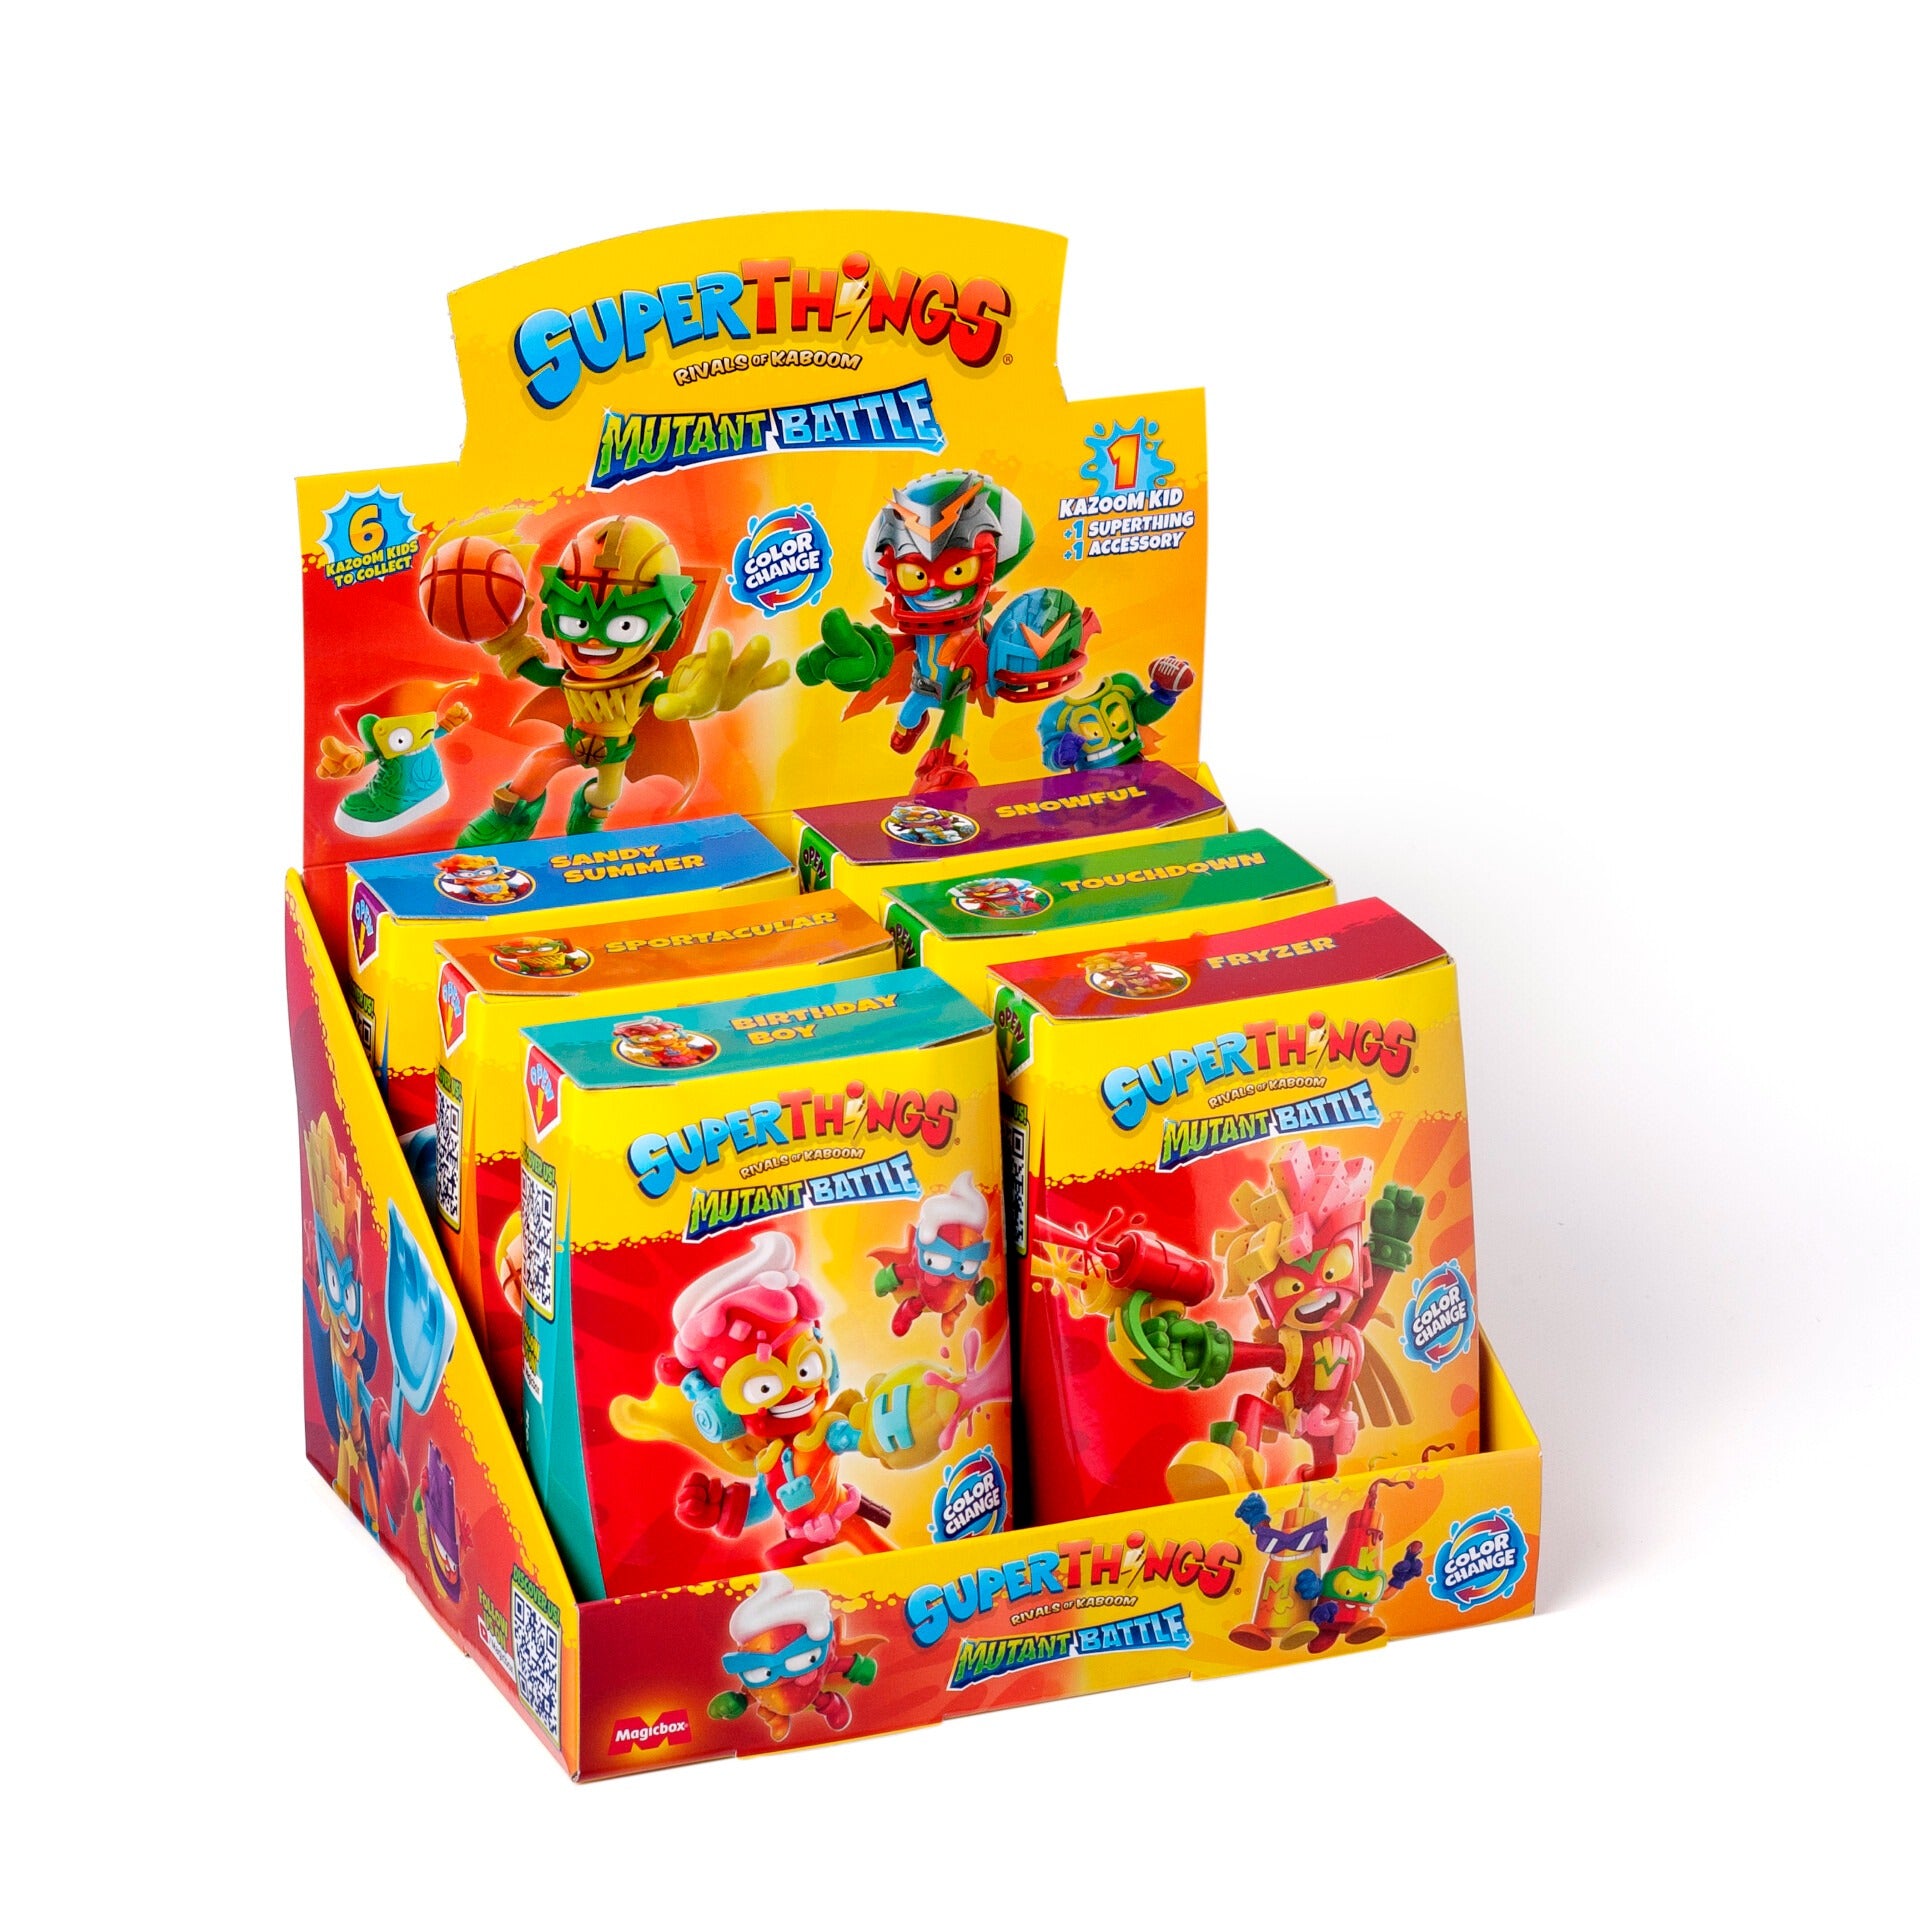 SuperThings Kazoom Kids Battle Sand and Surprise Set, 16 Sets